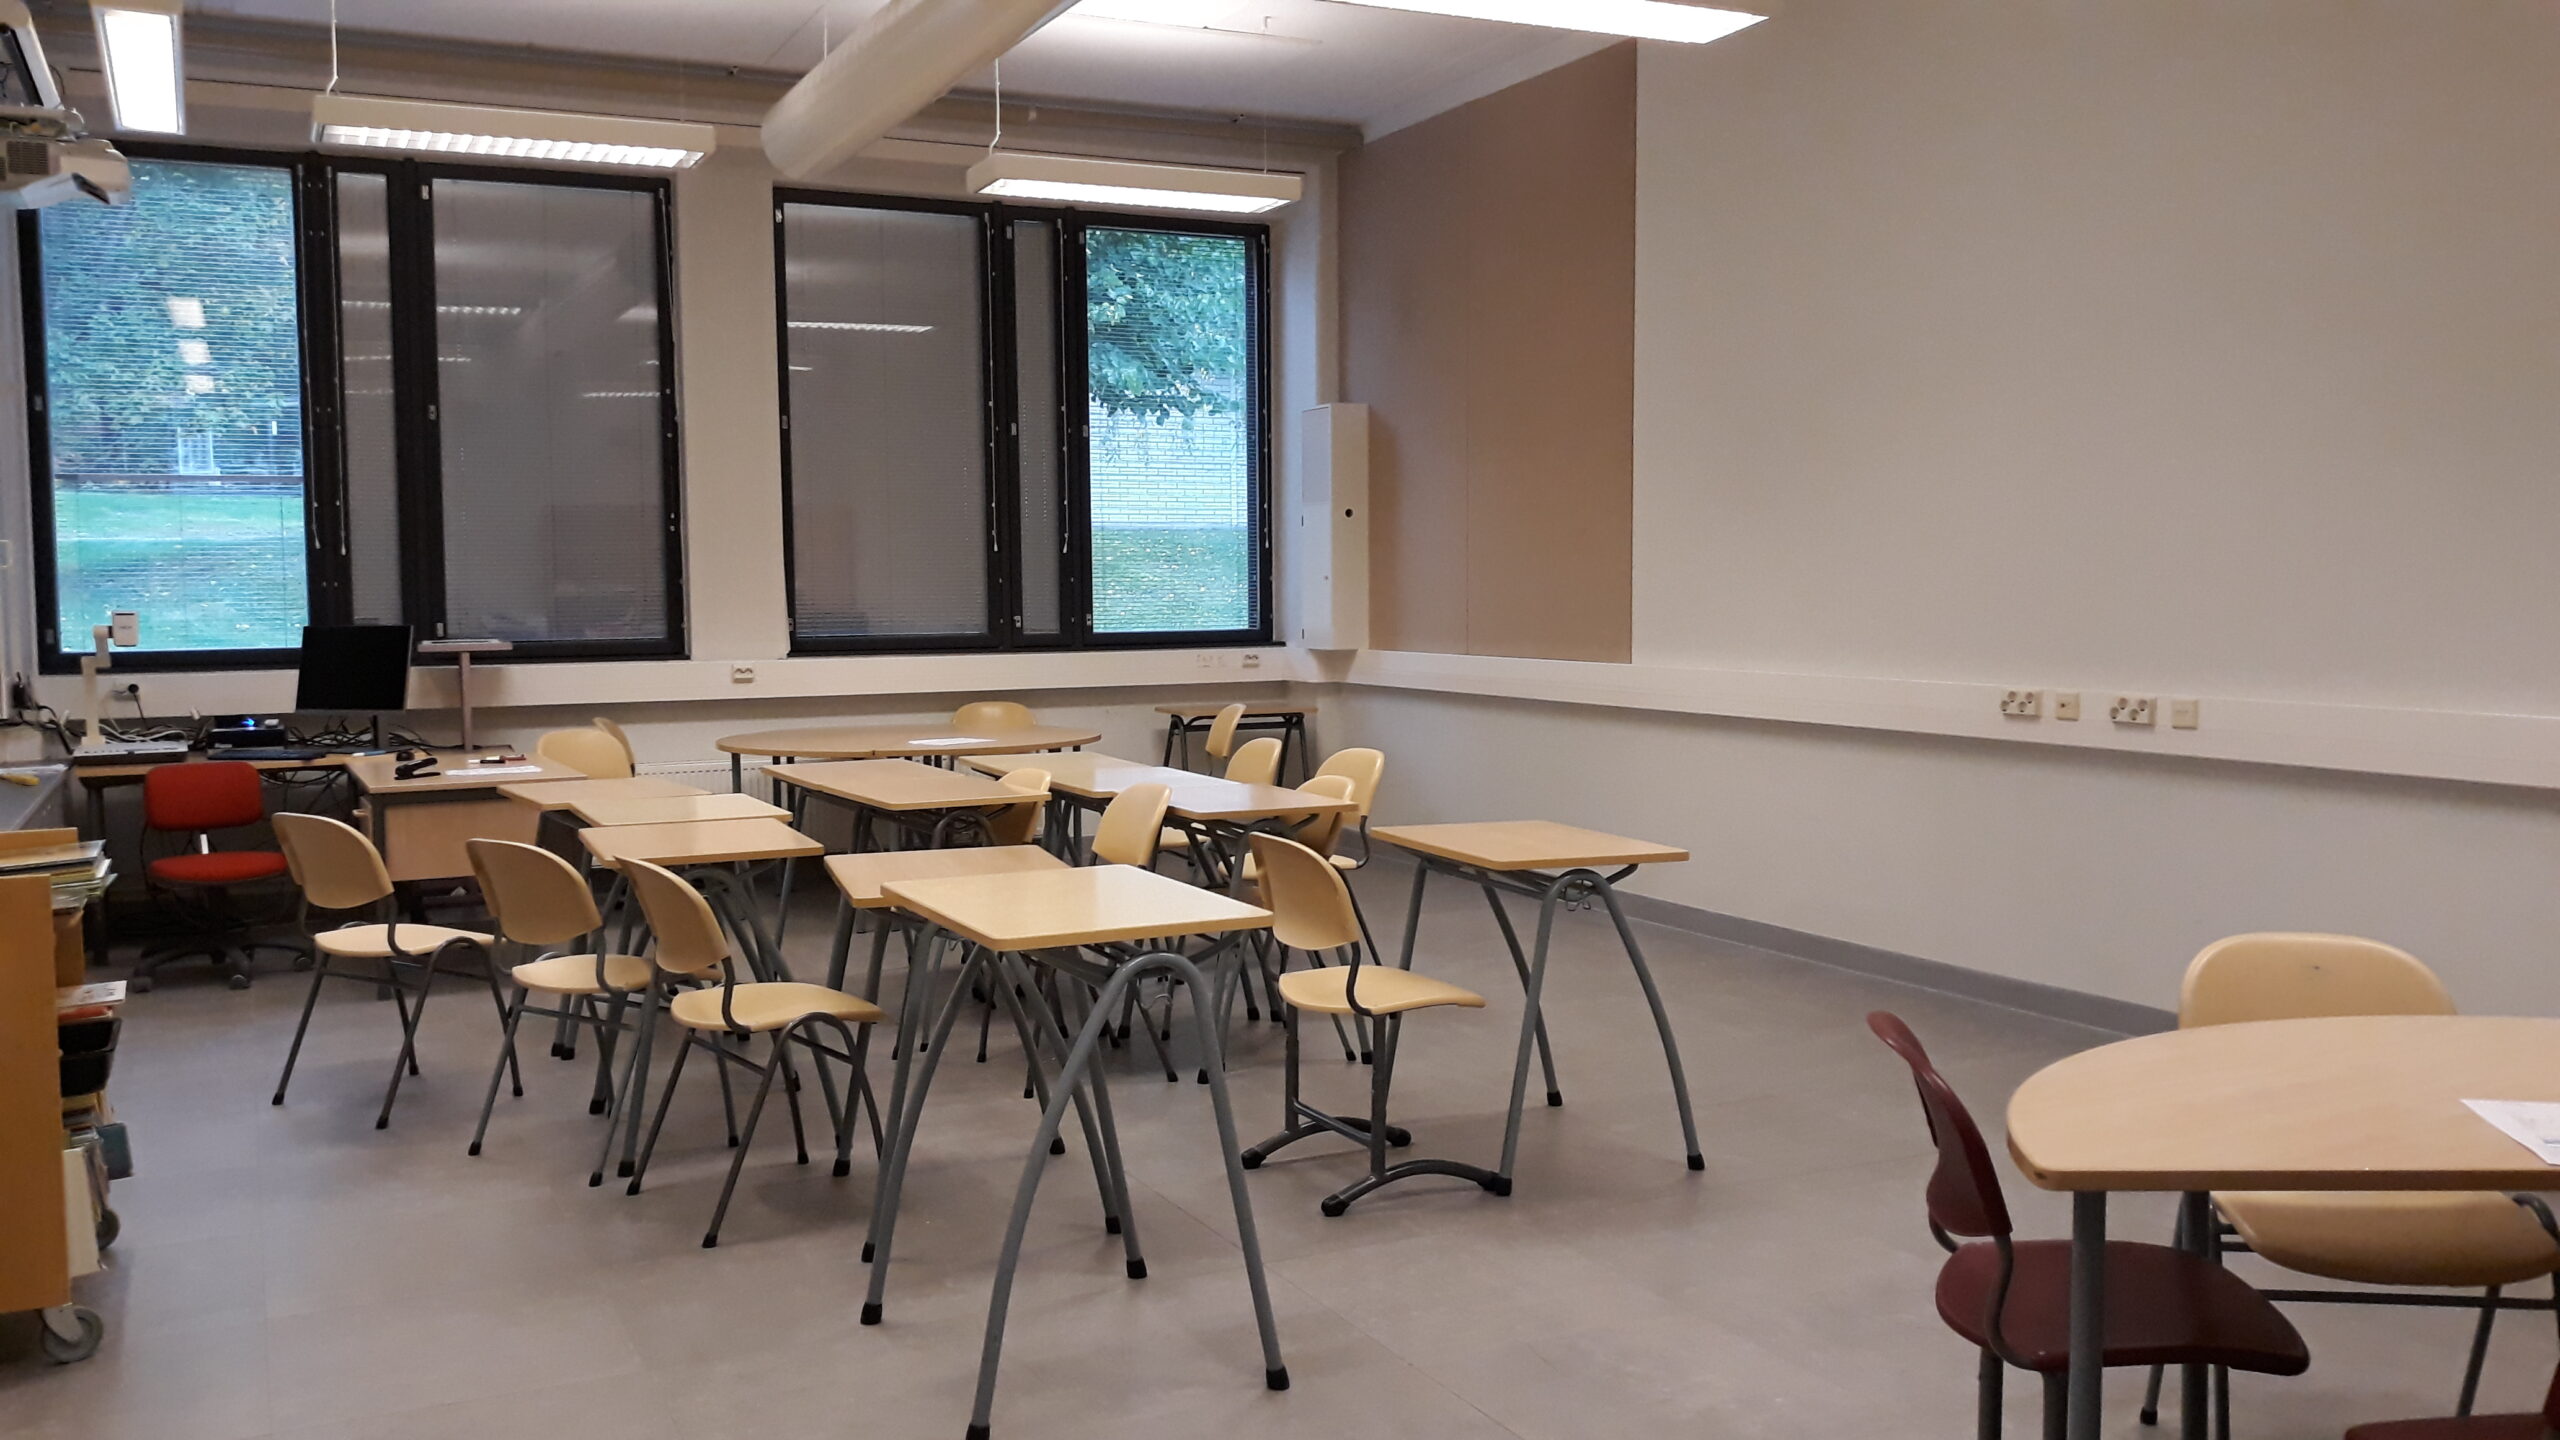 luokkahuone, tuoleja, pulpetteja